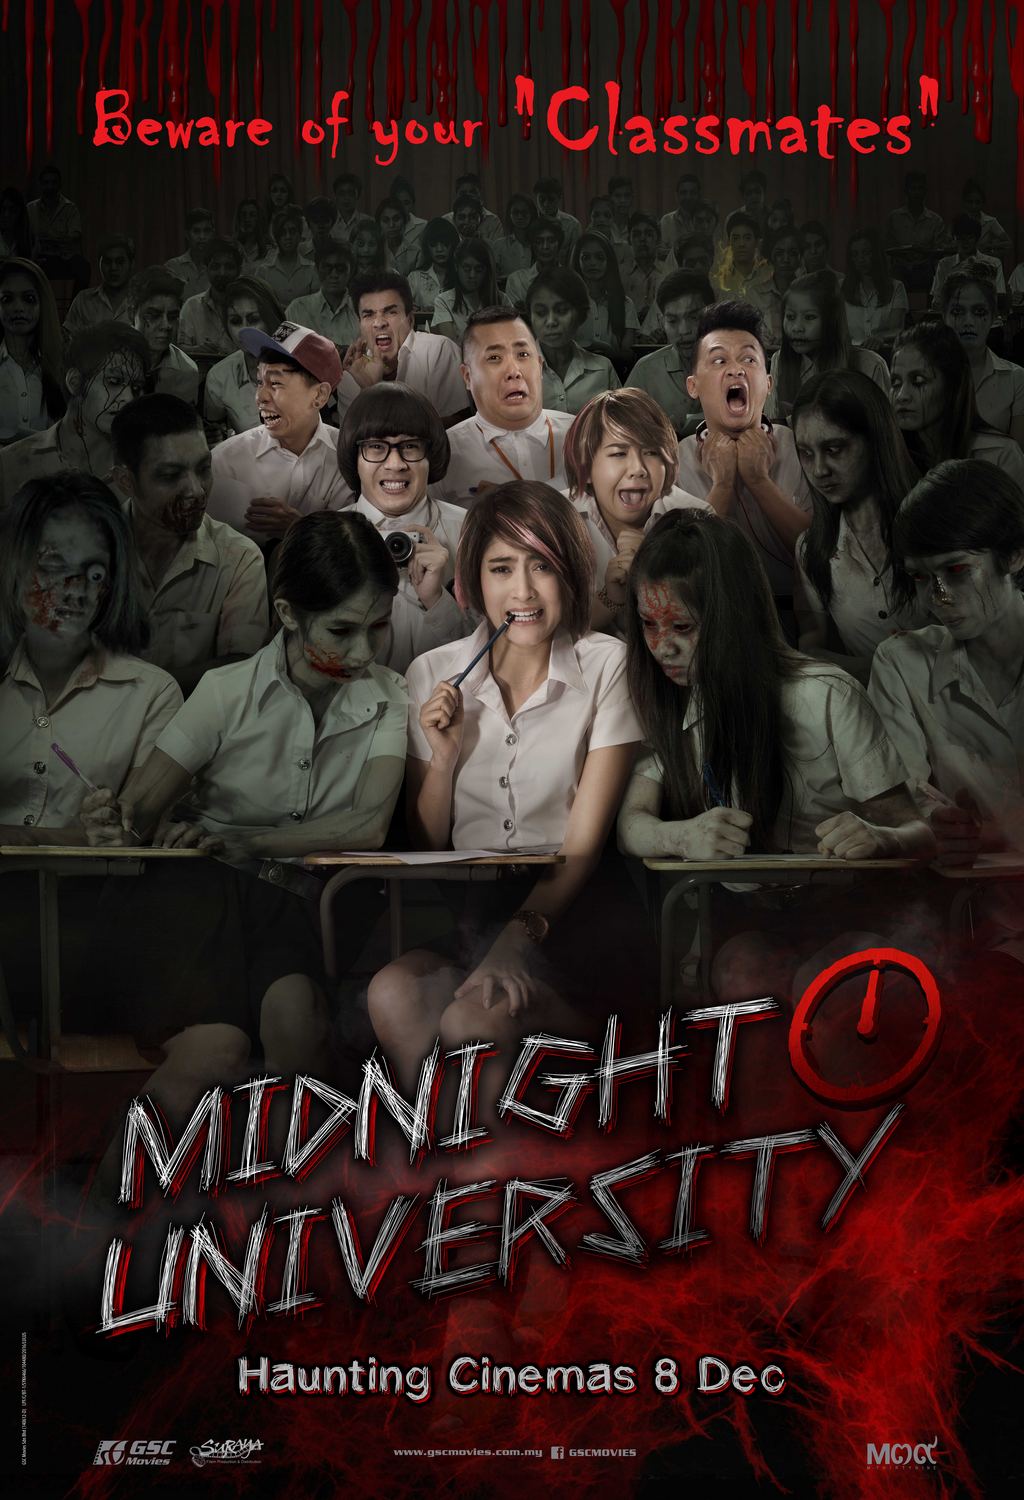 Đại Học Ma - Midnight University